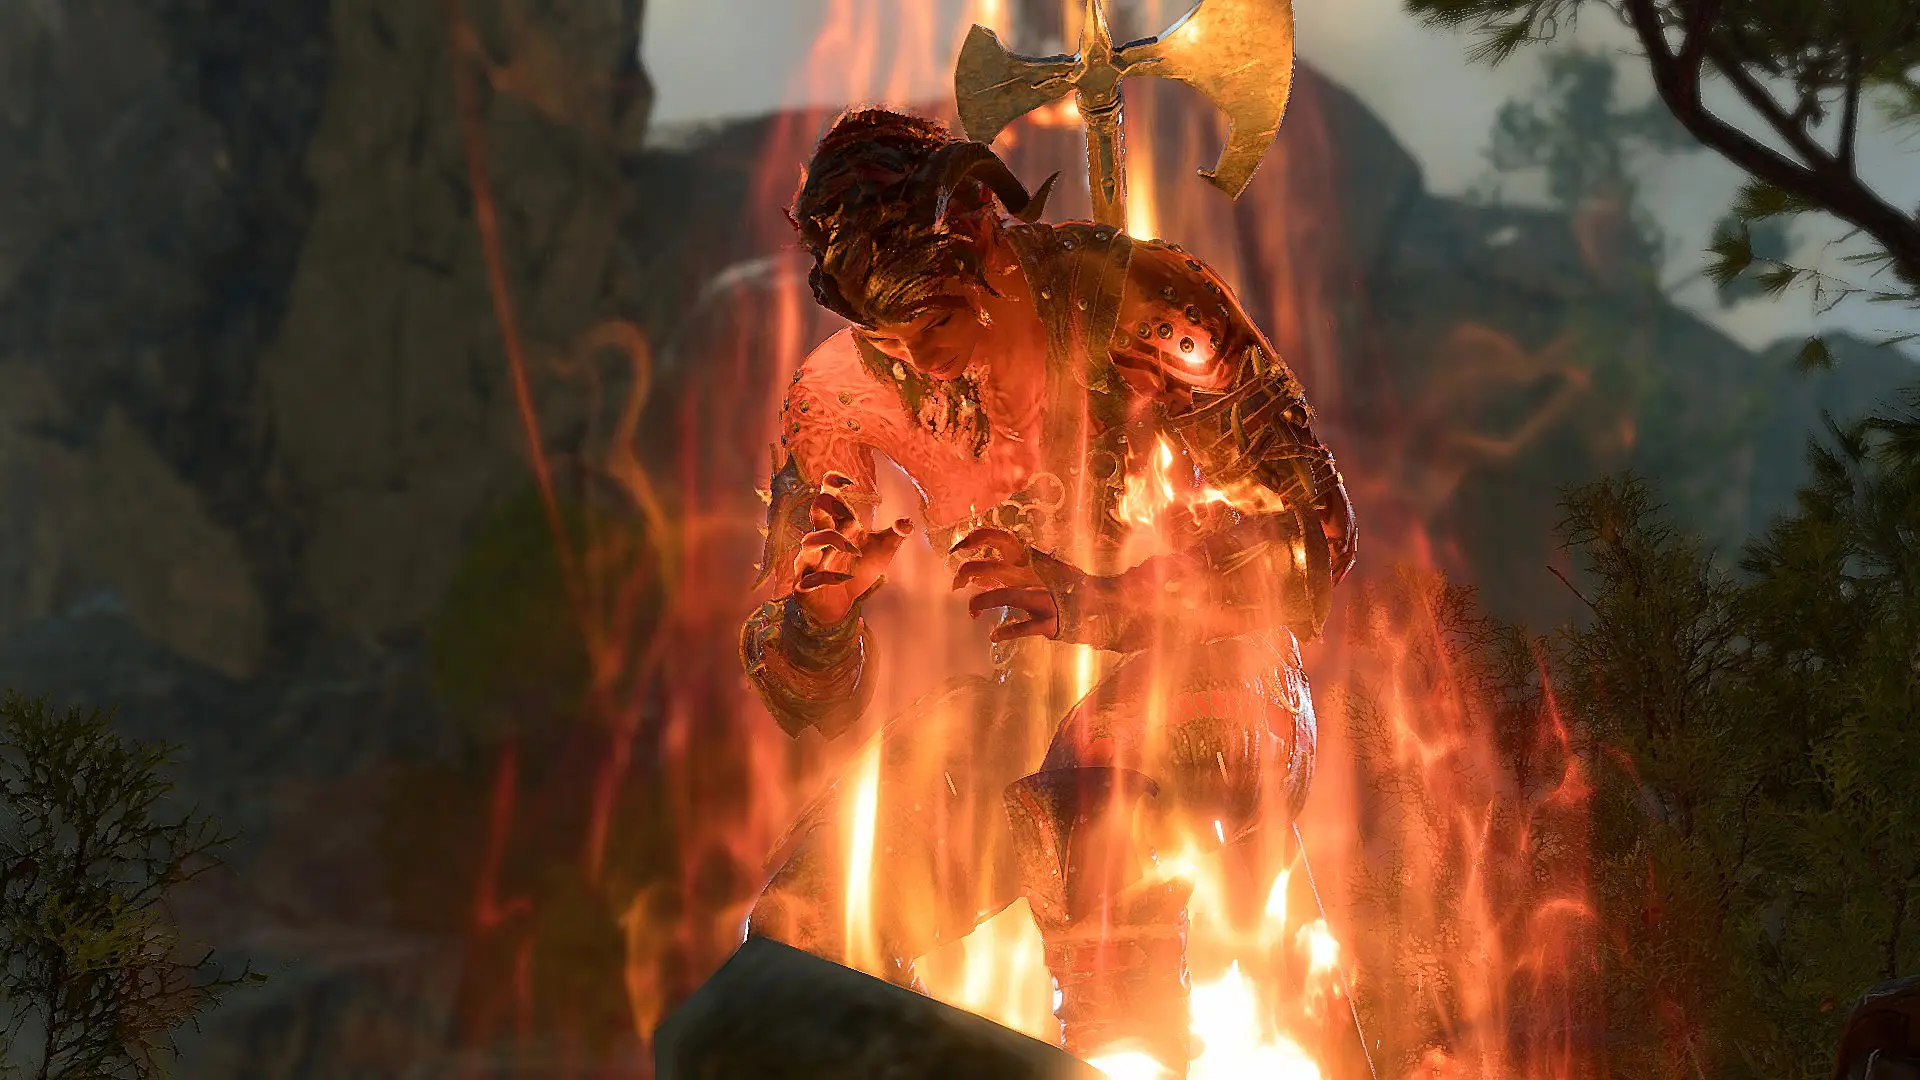 Our Fiery Friend Baldur’s Gate 3 Quest: walkthrough